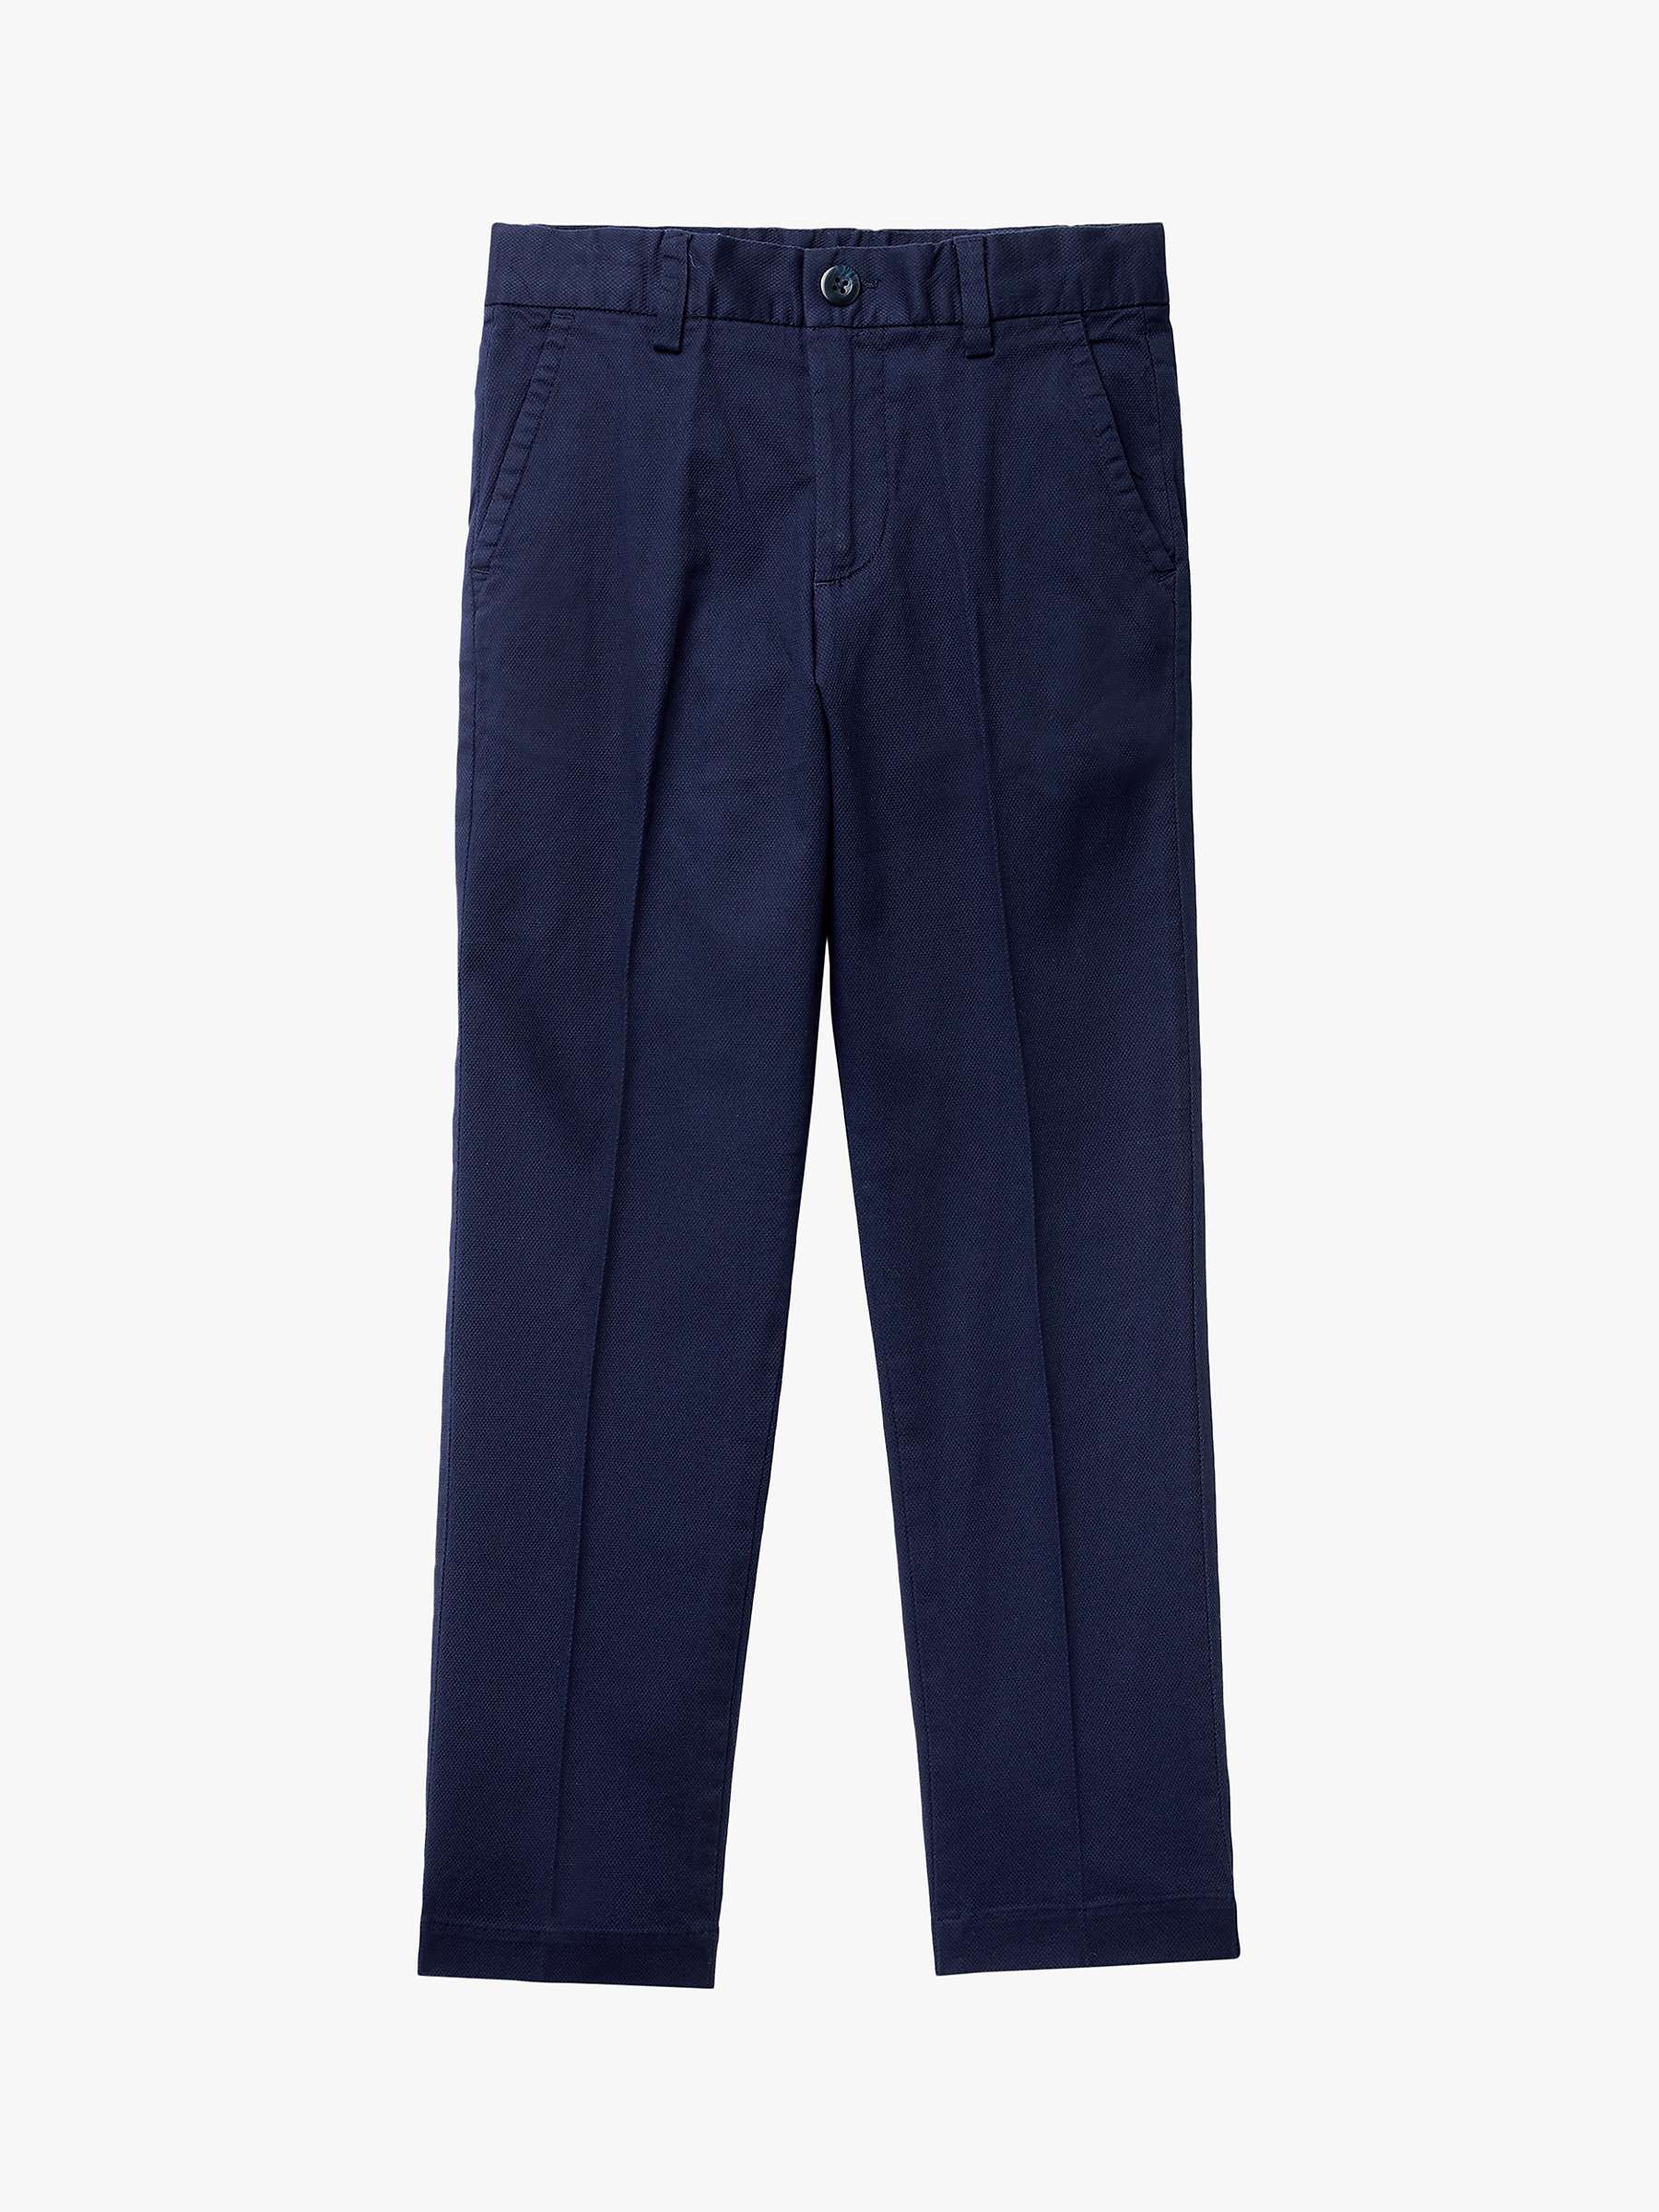 Buy Benetton Kids' Elegant Trousers, Blue Online at johnlewis.com